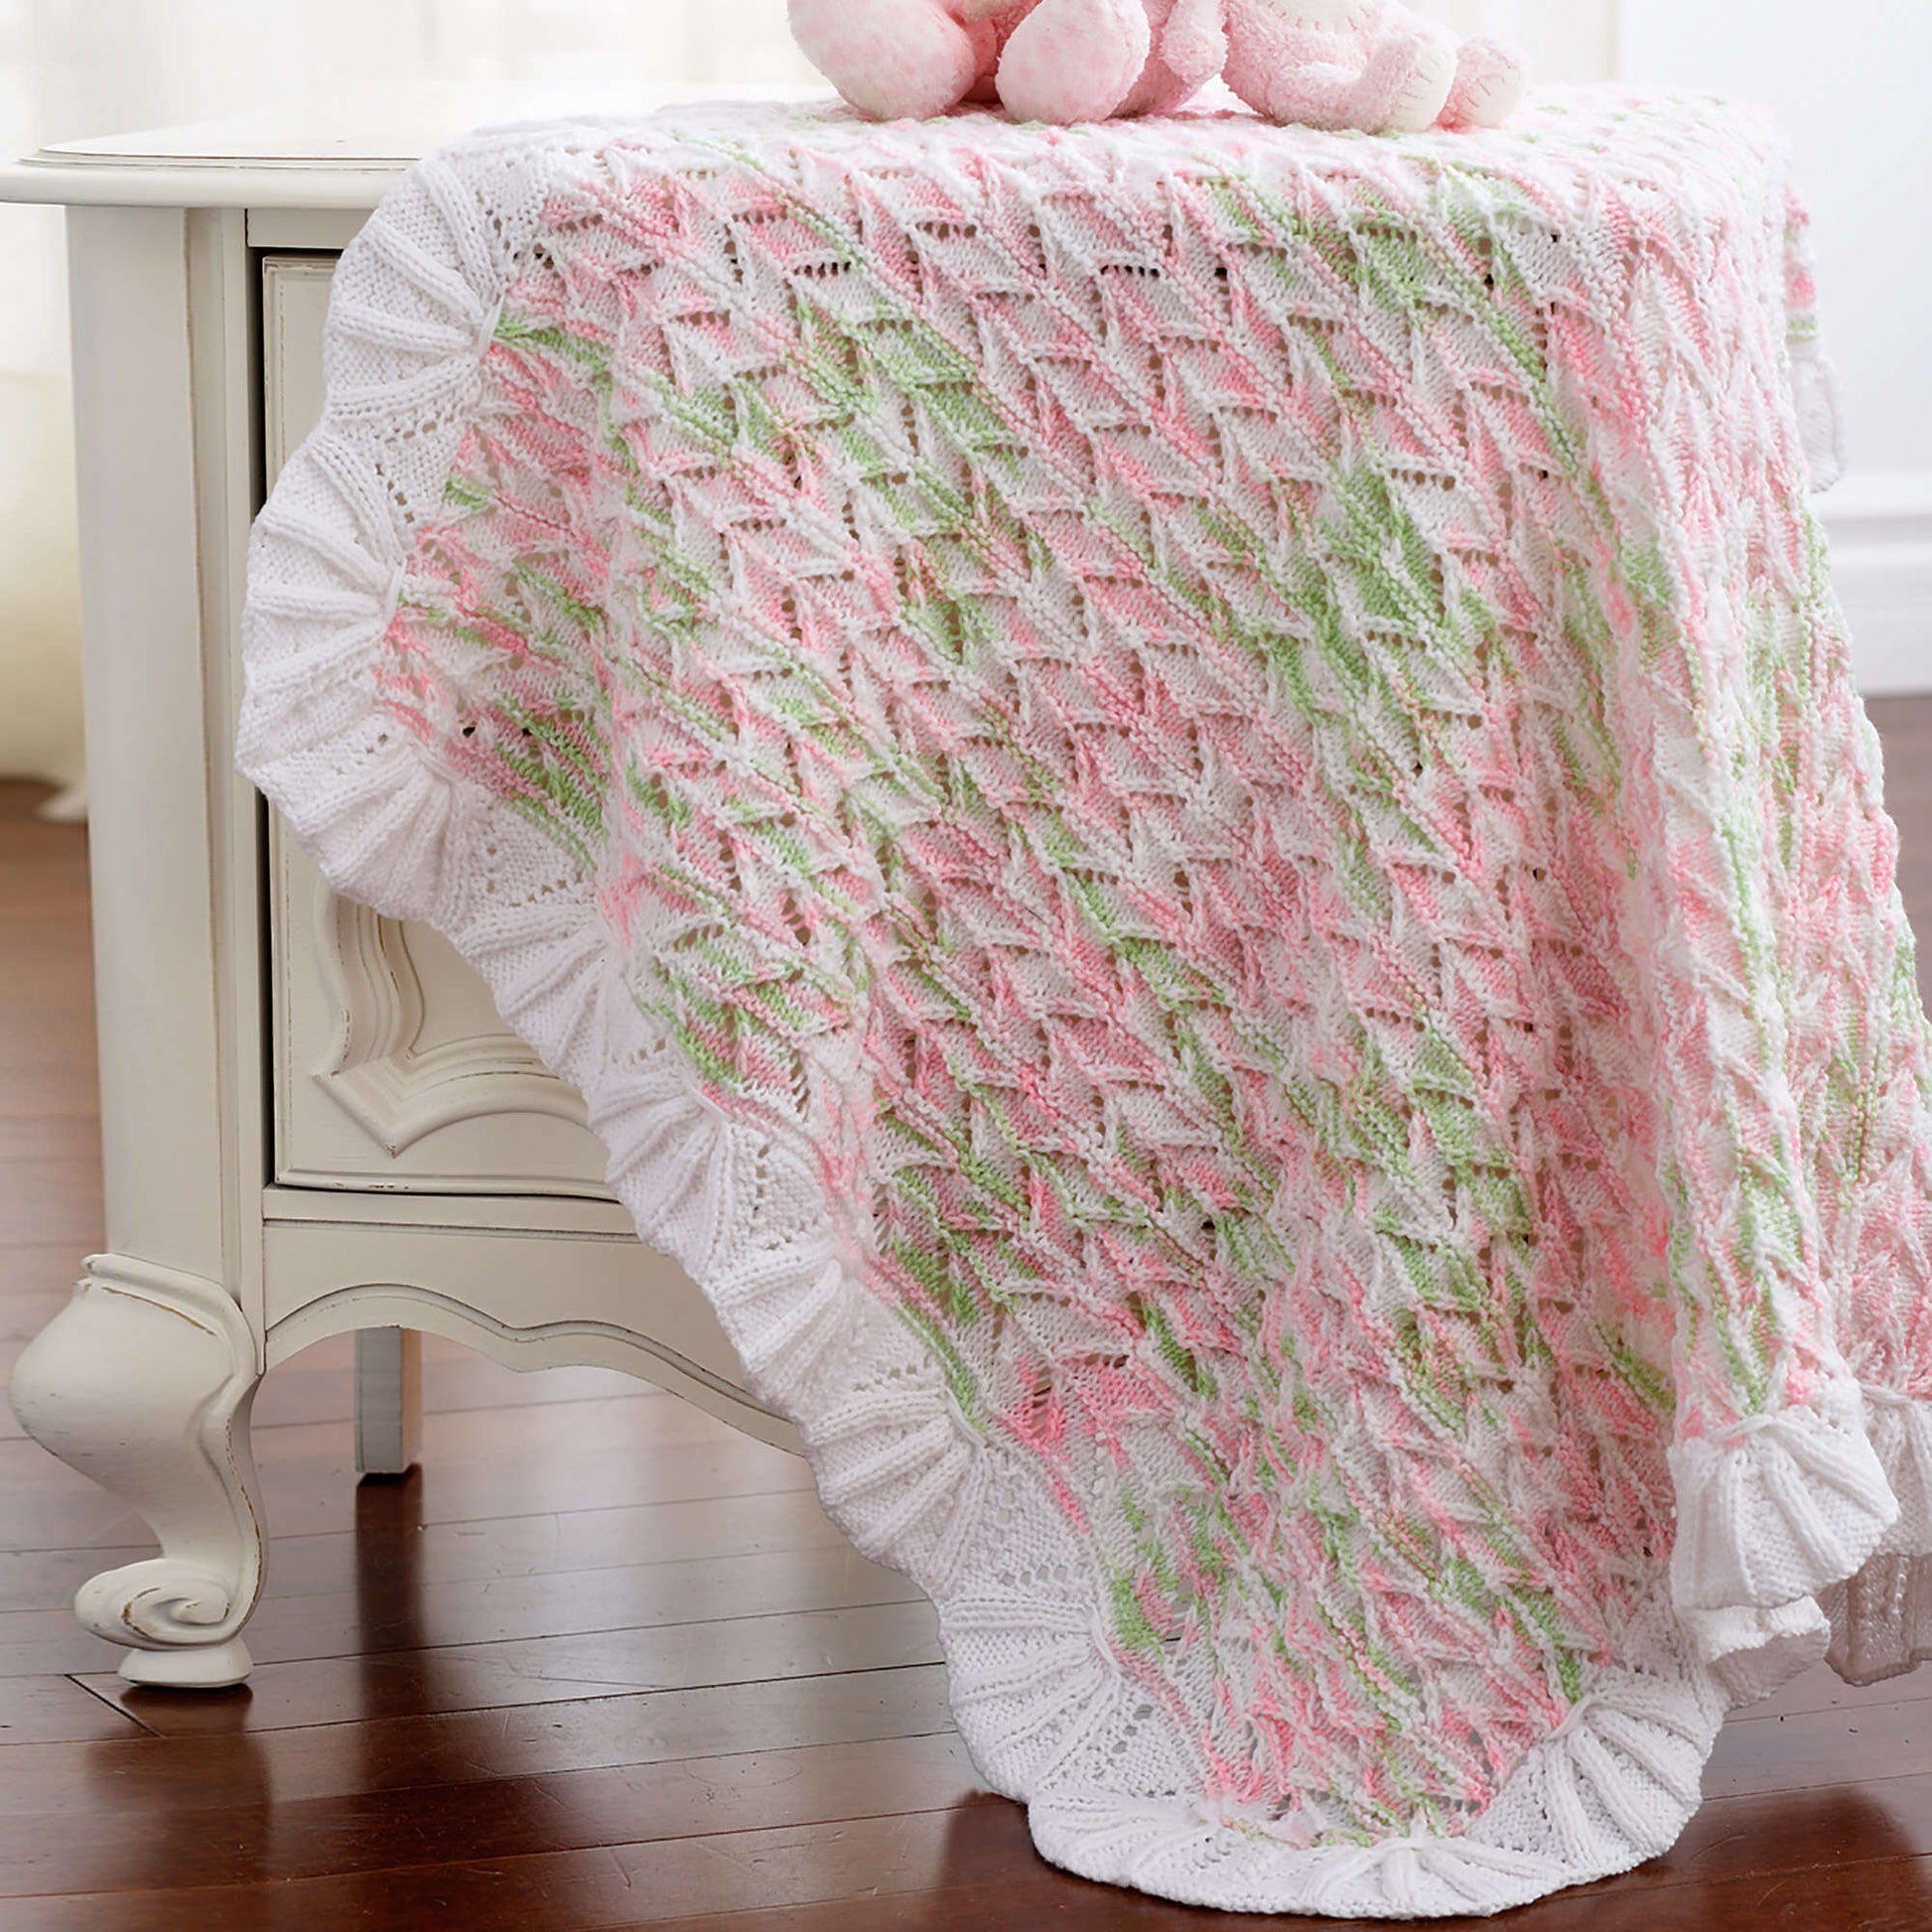 Free Bernat Lacy Blanket To Knit Pattern